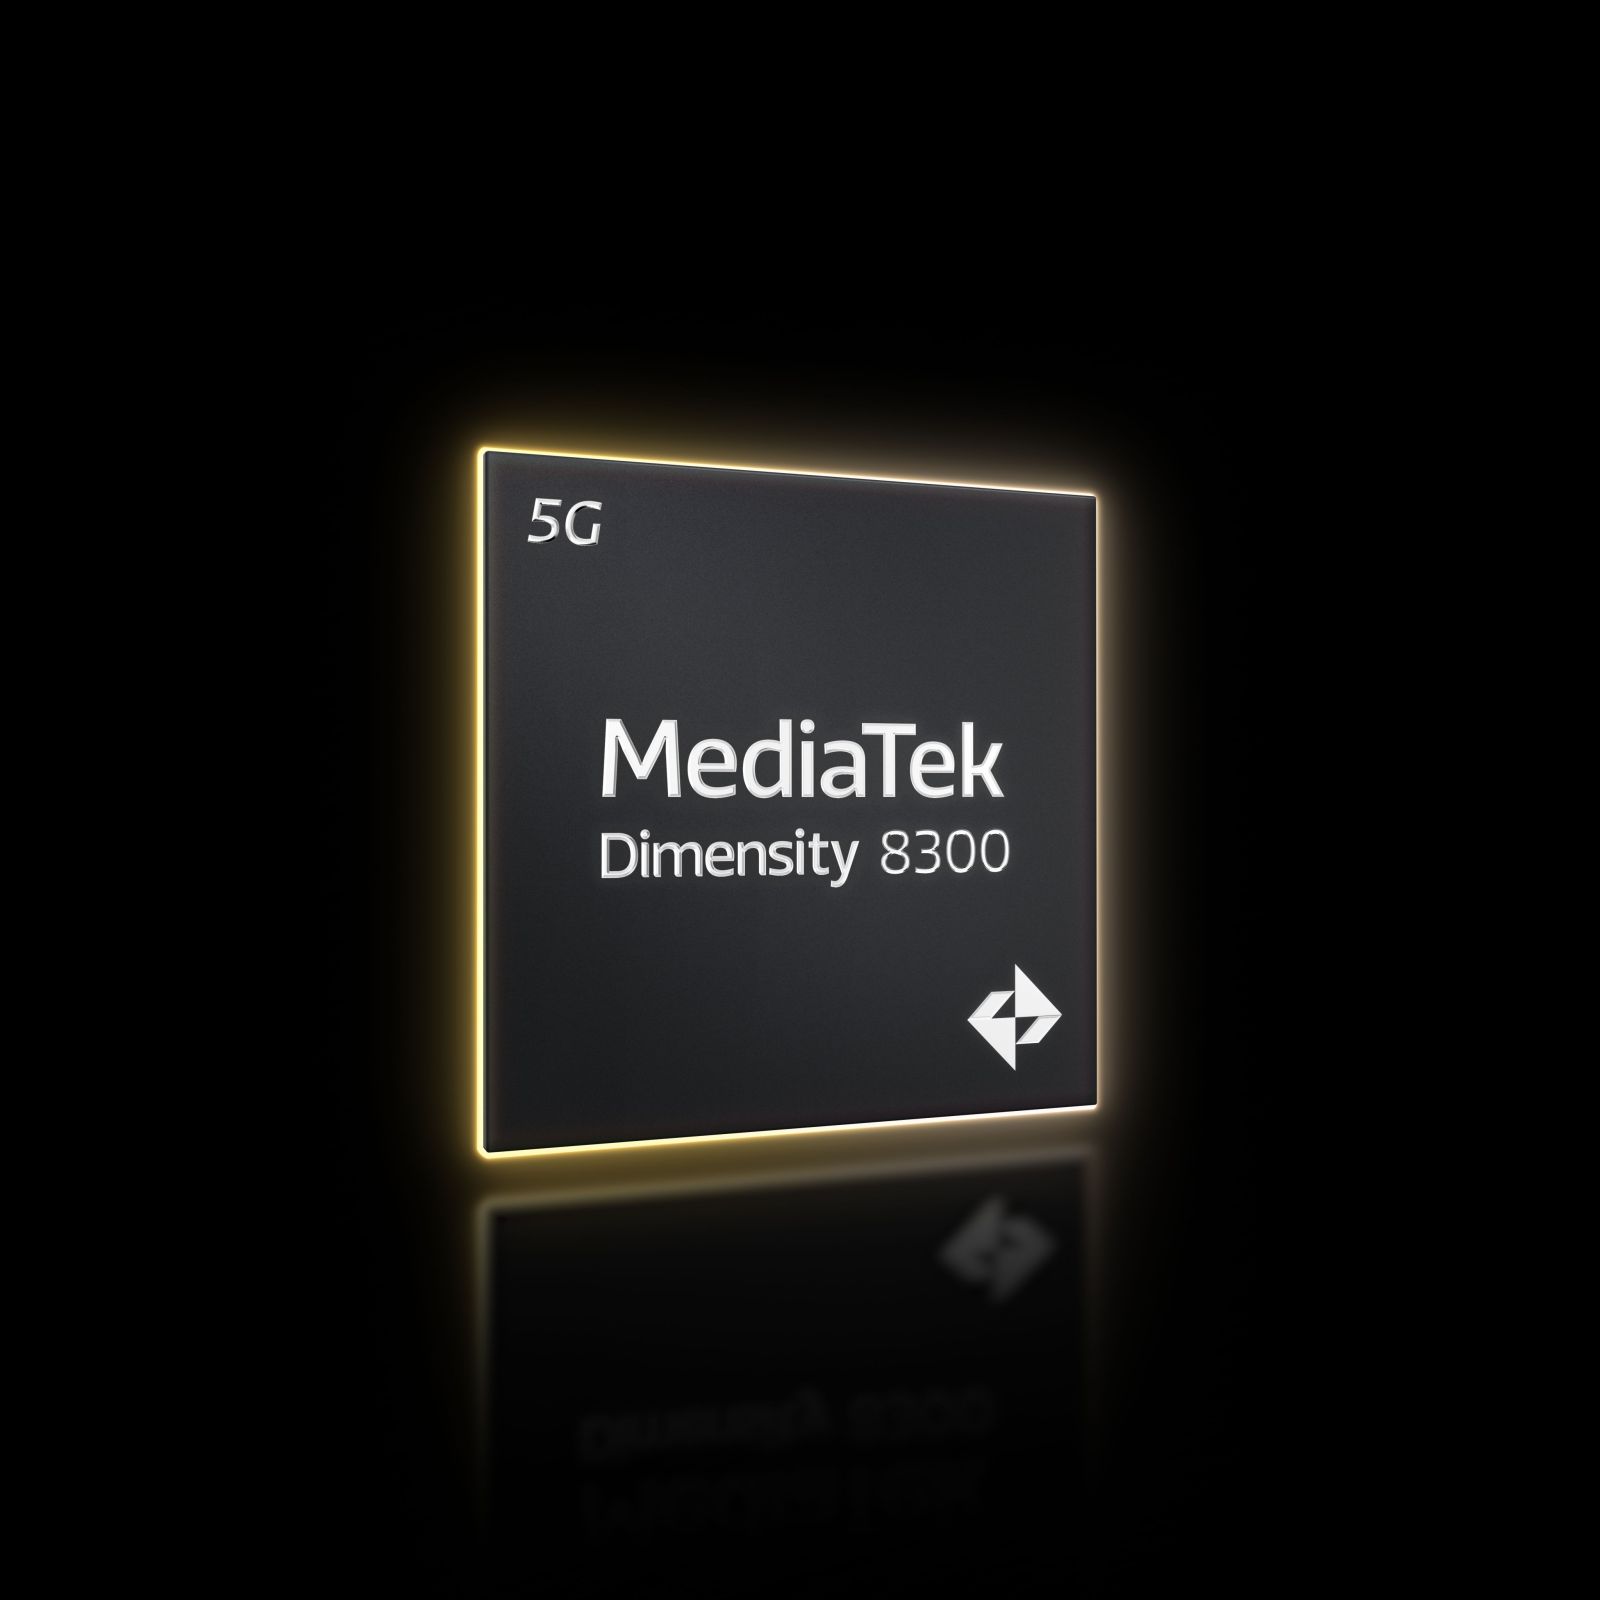 224951-mediatek-dimensity-8300-smartphone-5g